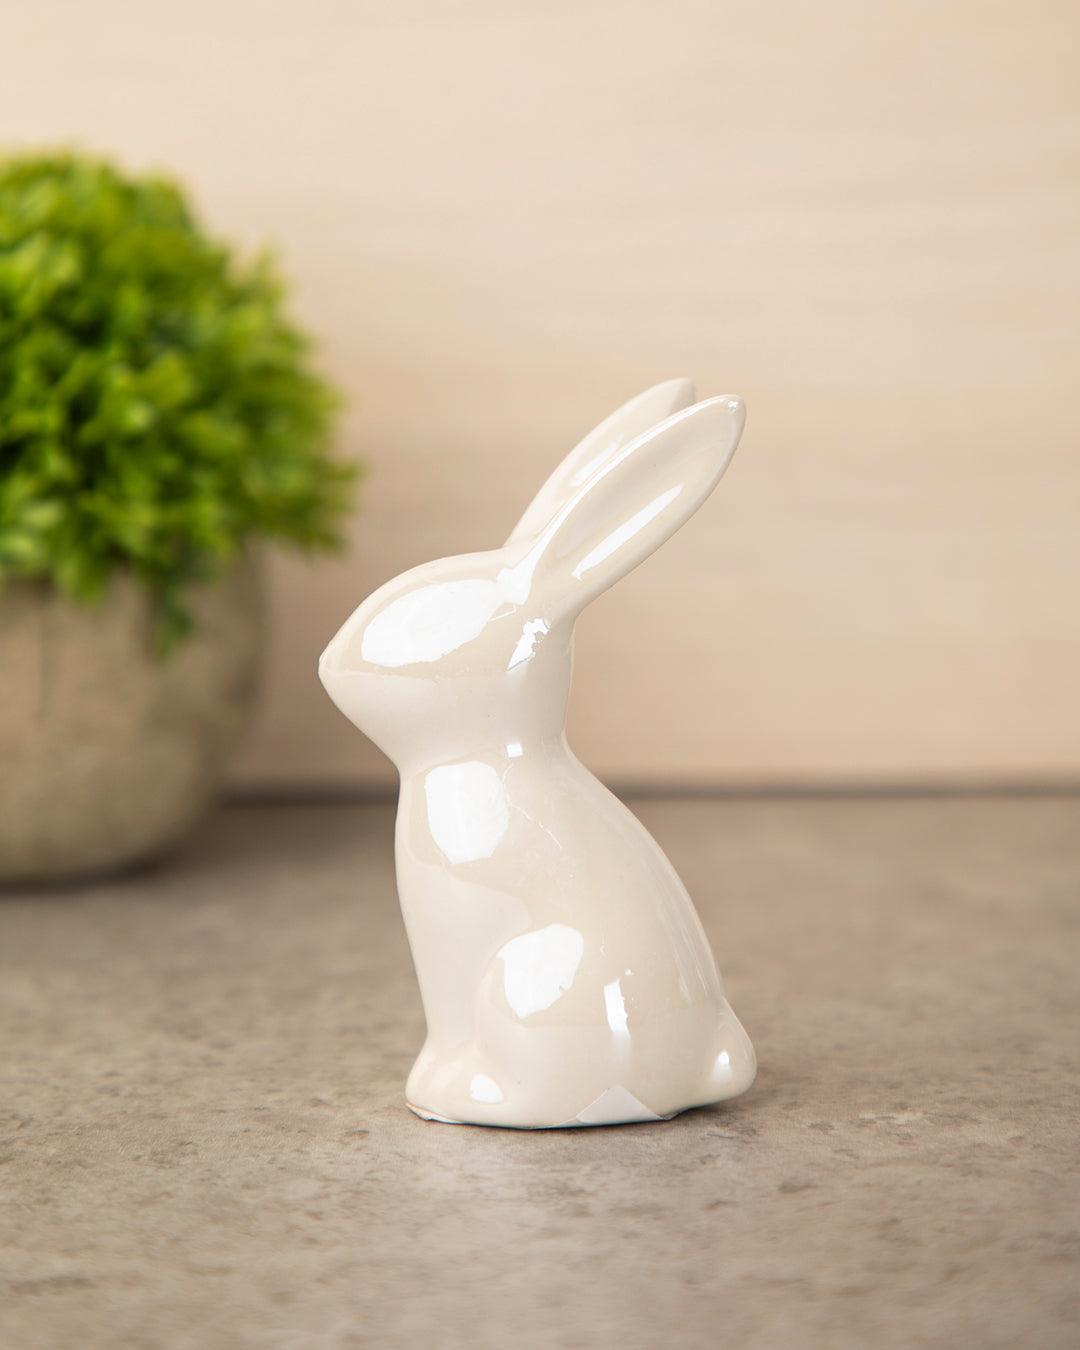 Décor Bunny, Decorative Object, White, Ceramic - MARKET 99